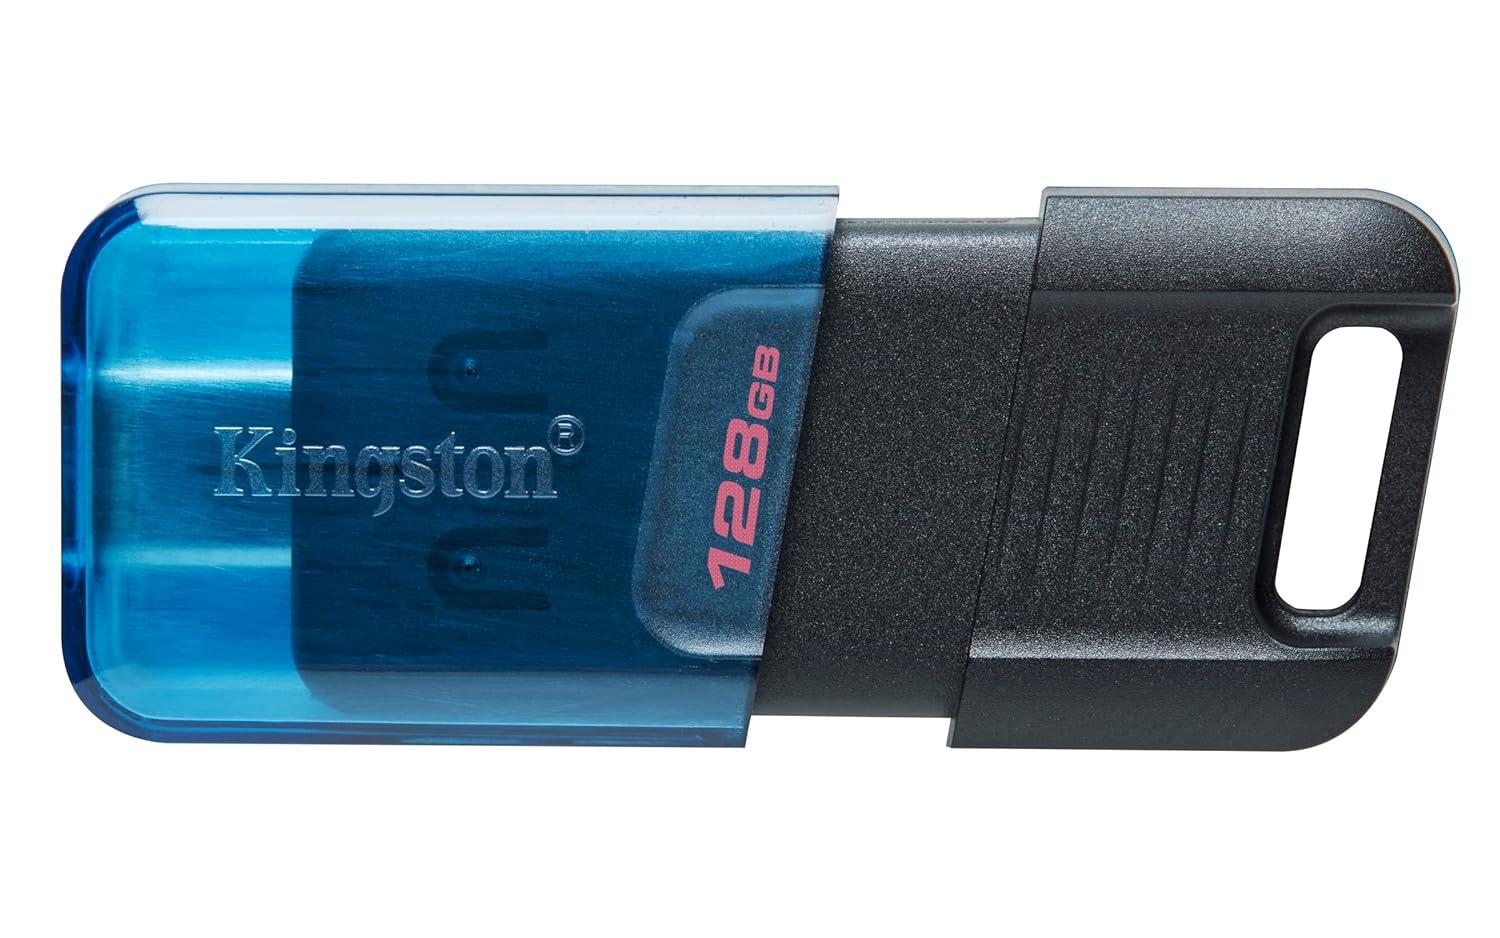 Selected image for KINGSTON USB flash memorija DataTraveler 80 M 128GB USB-C 3.2 flash DT80M/128GB crno-plavi